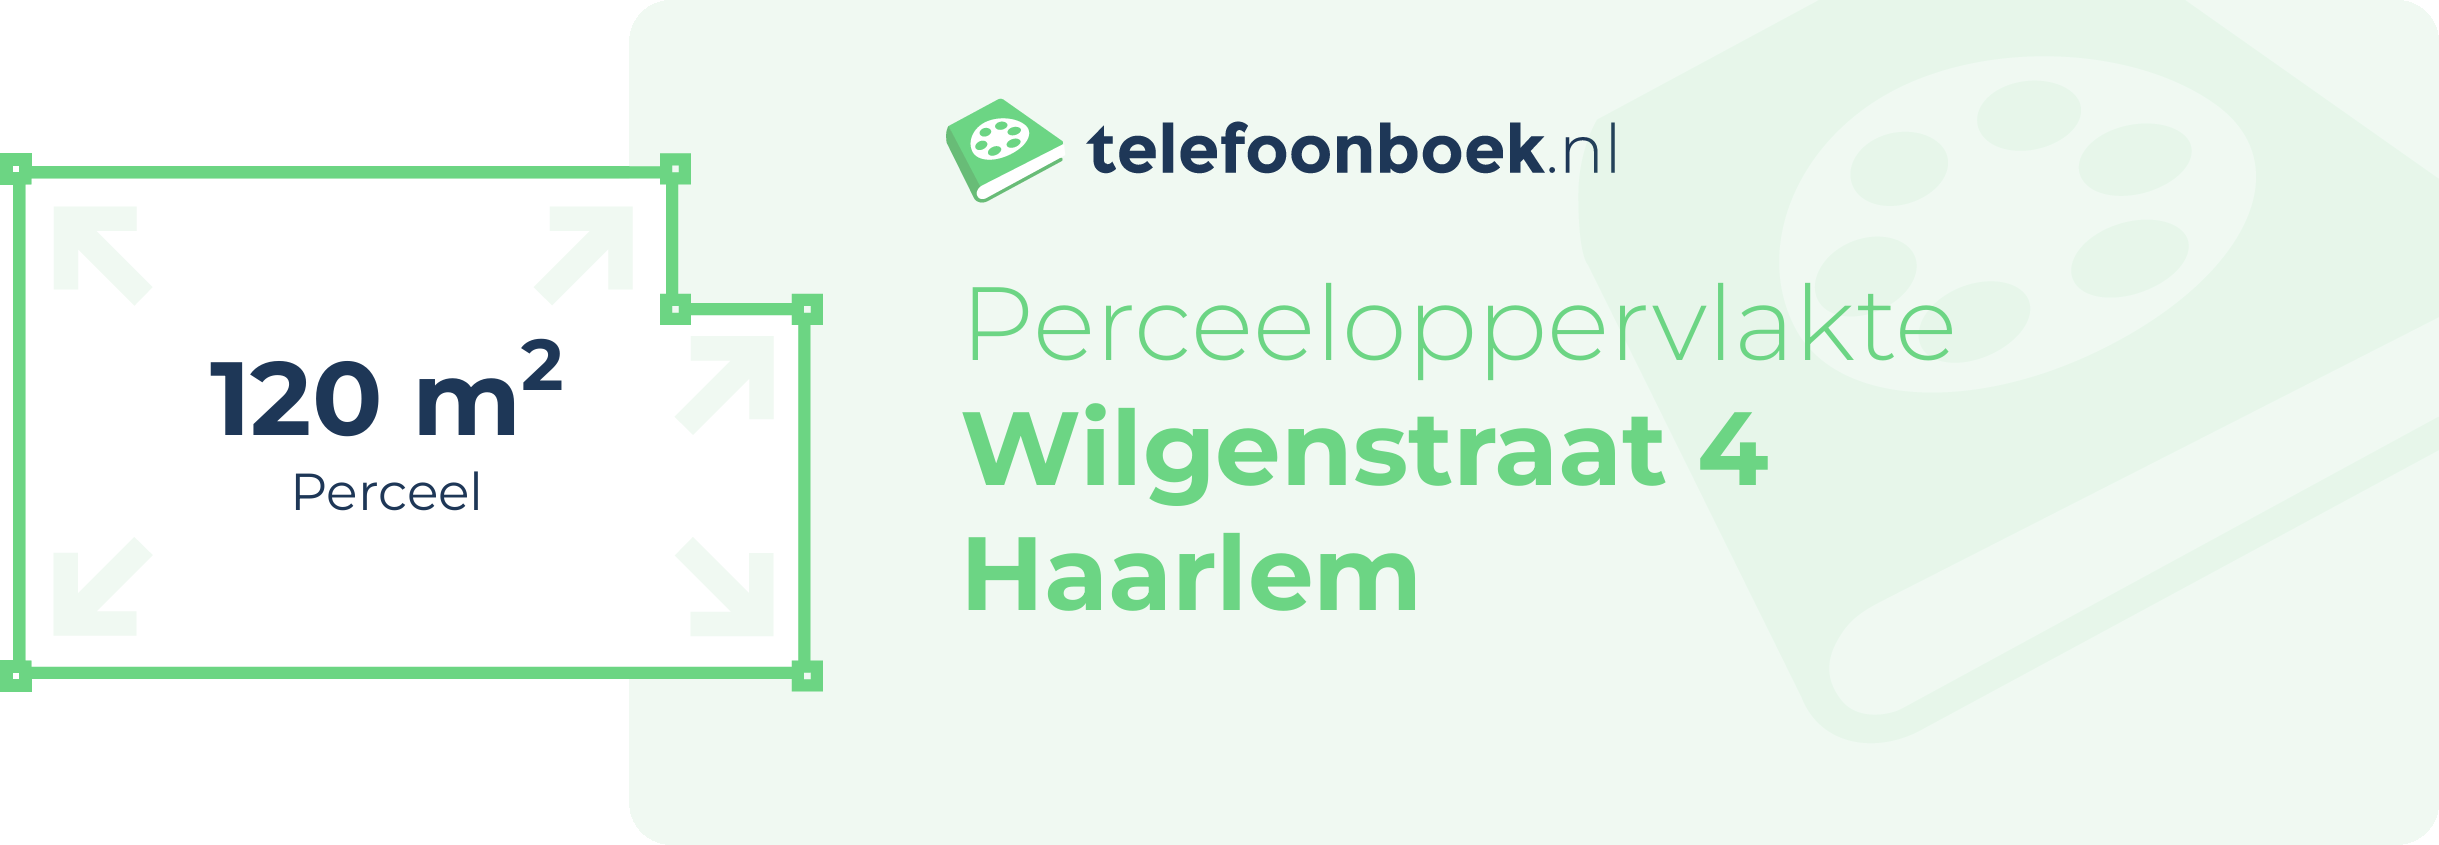 Perceeloppervlakte Wilgenstraat 4 Haarlem